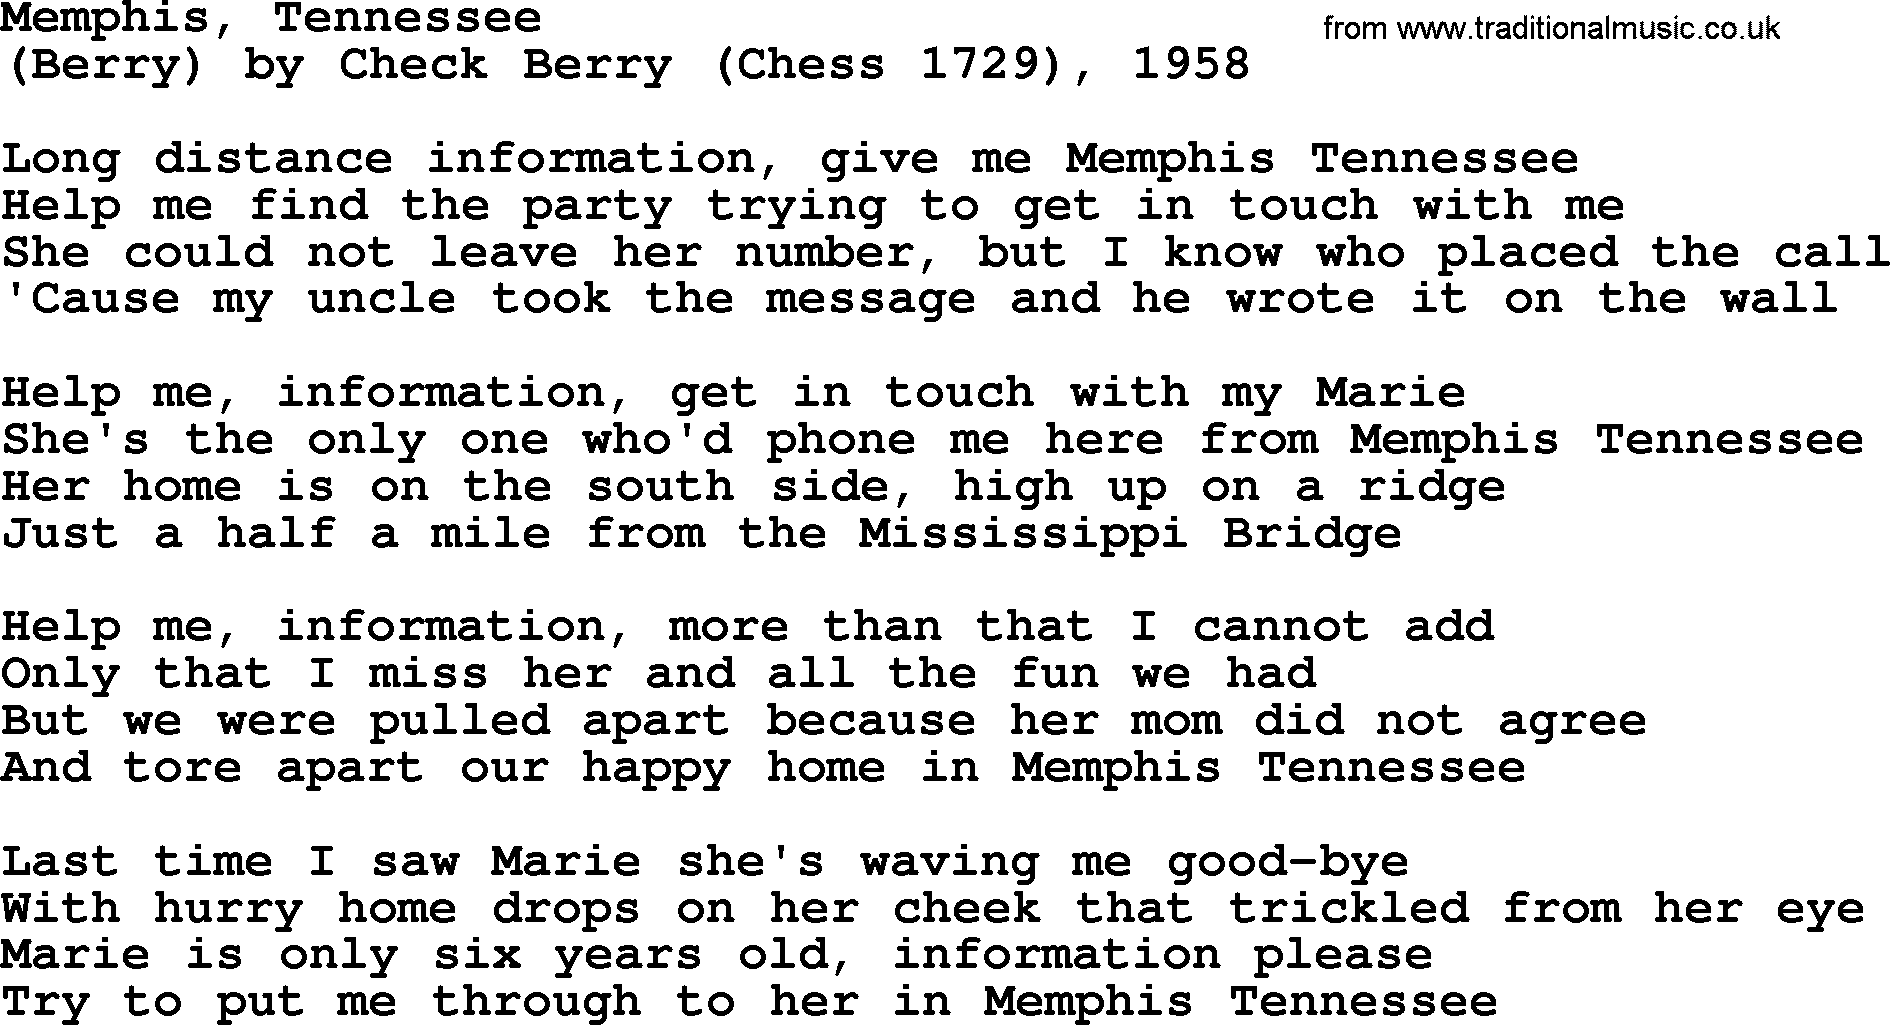 Bruce Springsteen song: Memphis, Tennessee lyrics